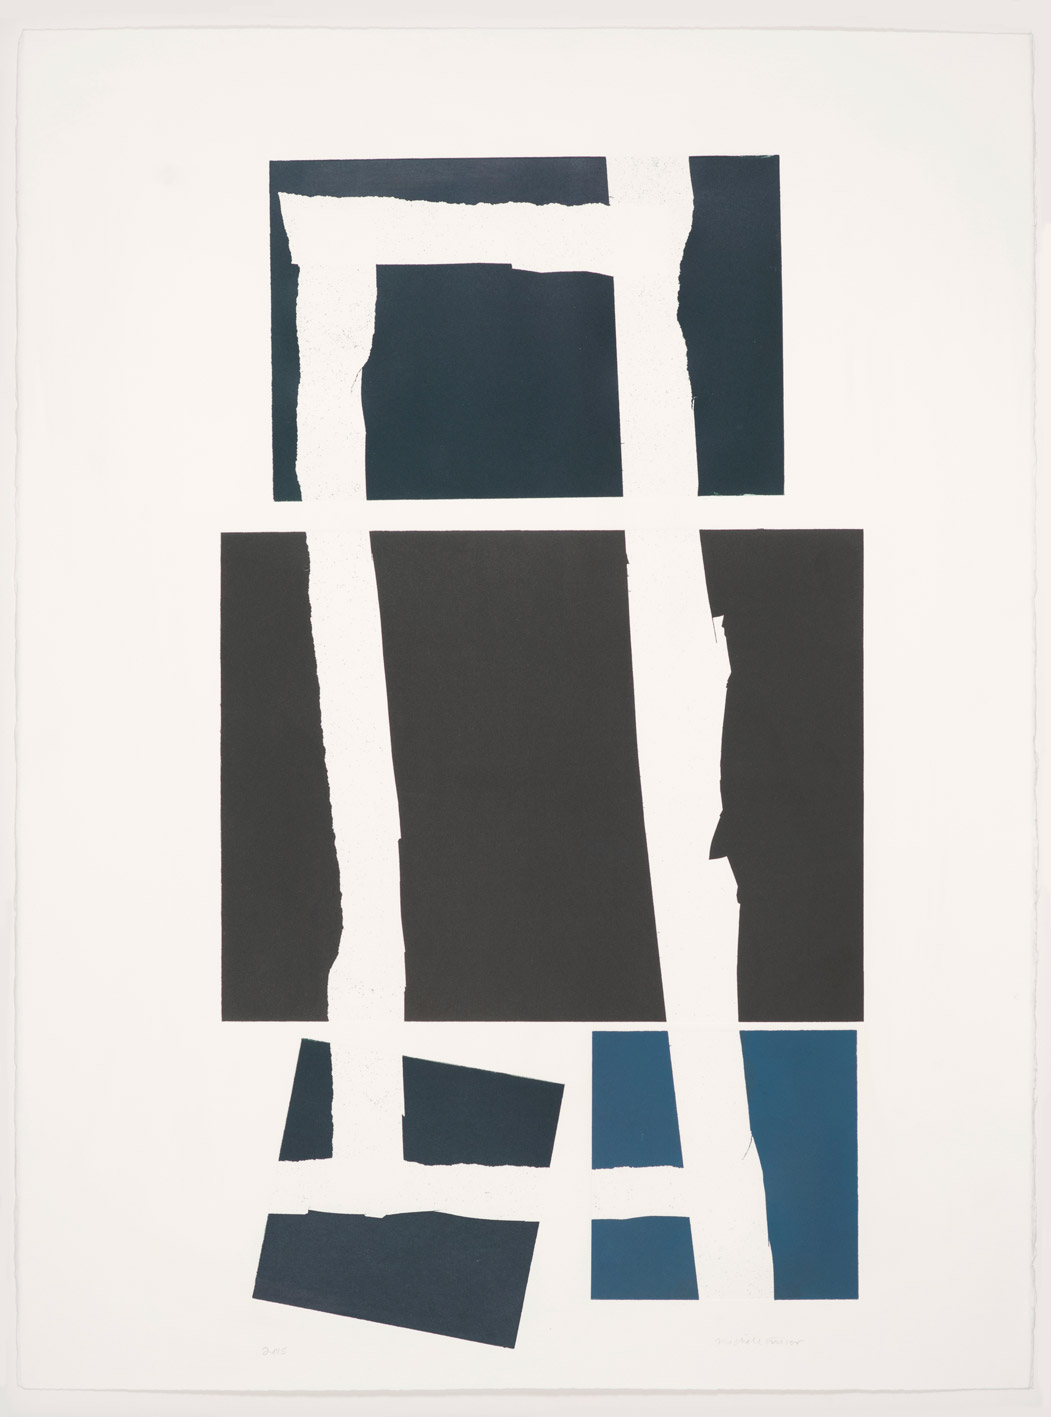 002 - Untitled, monoprint, 82 x 62 cm